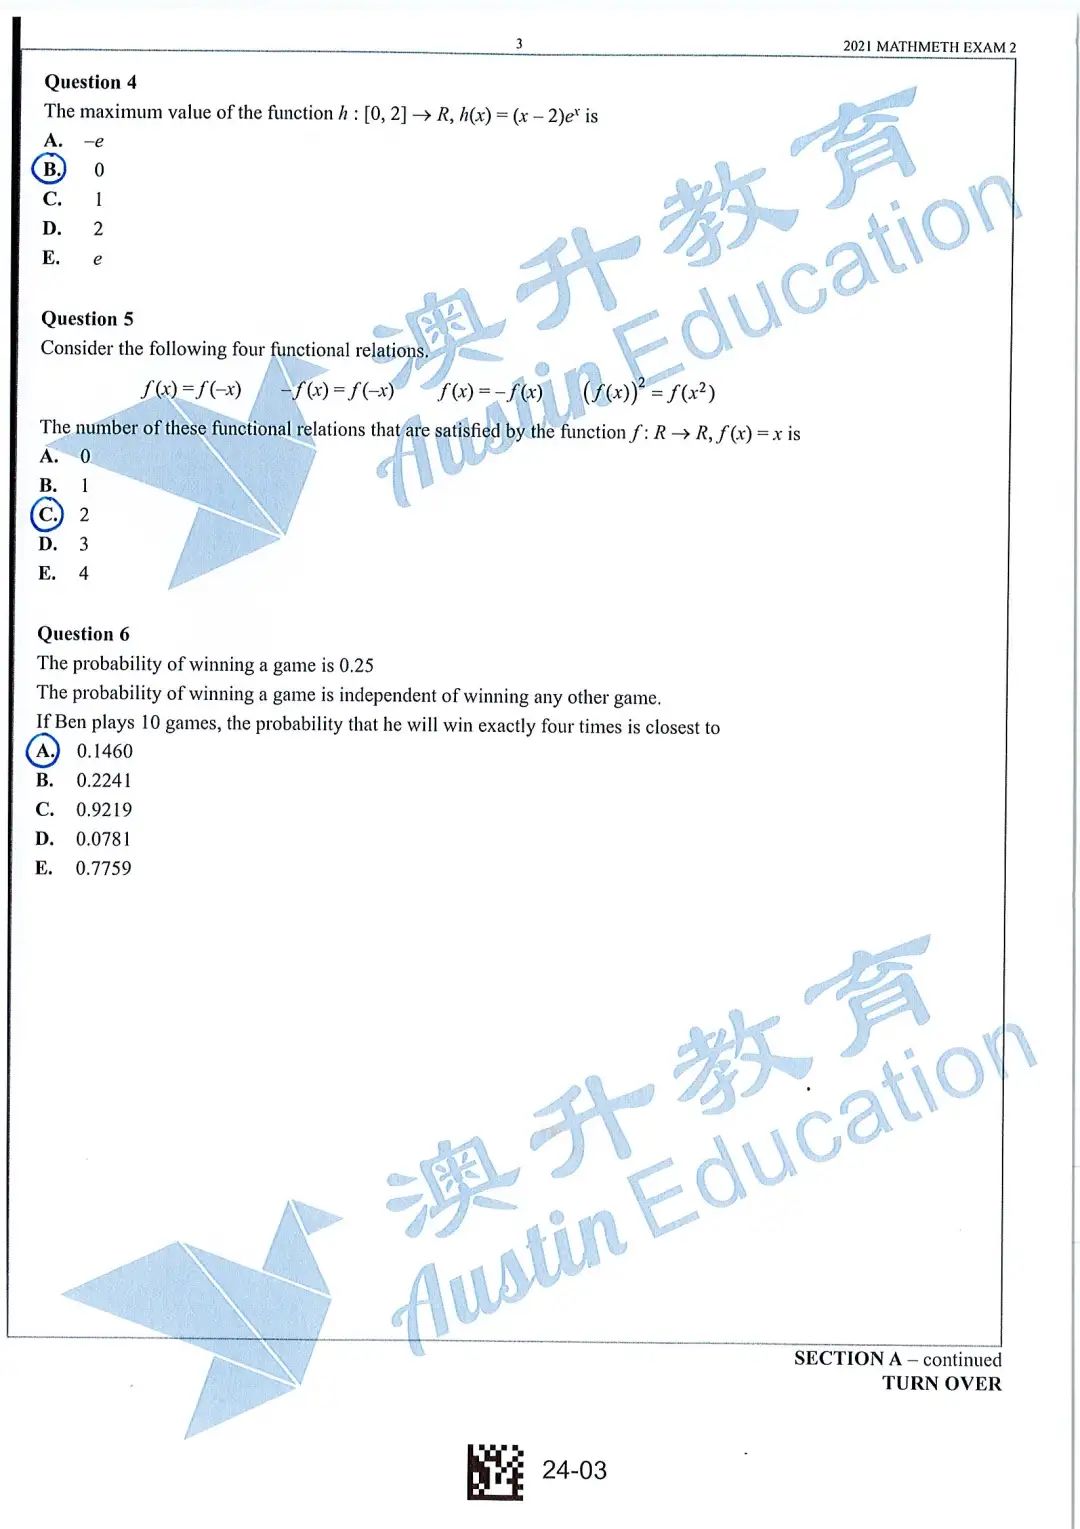 vce exam timetable 2021 - Austin Education 02